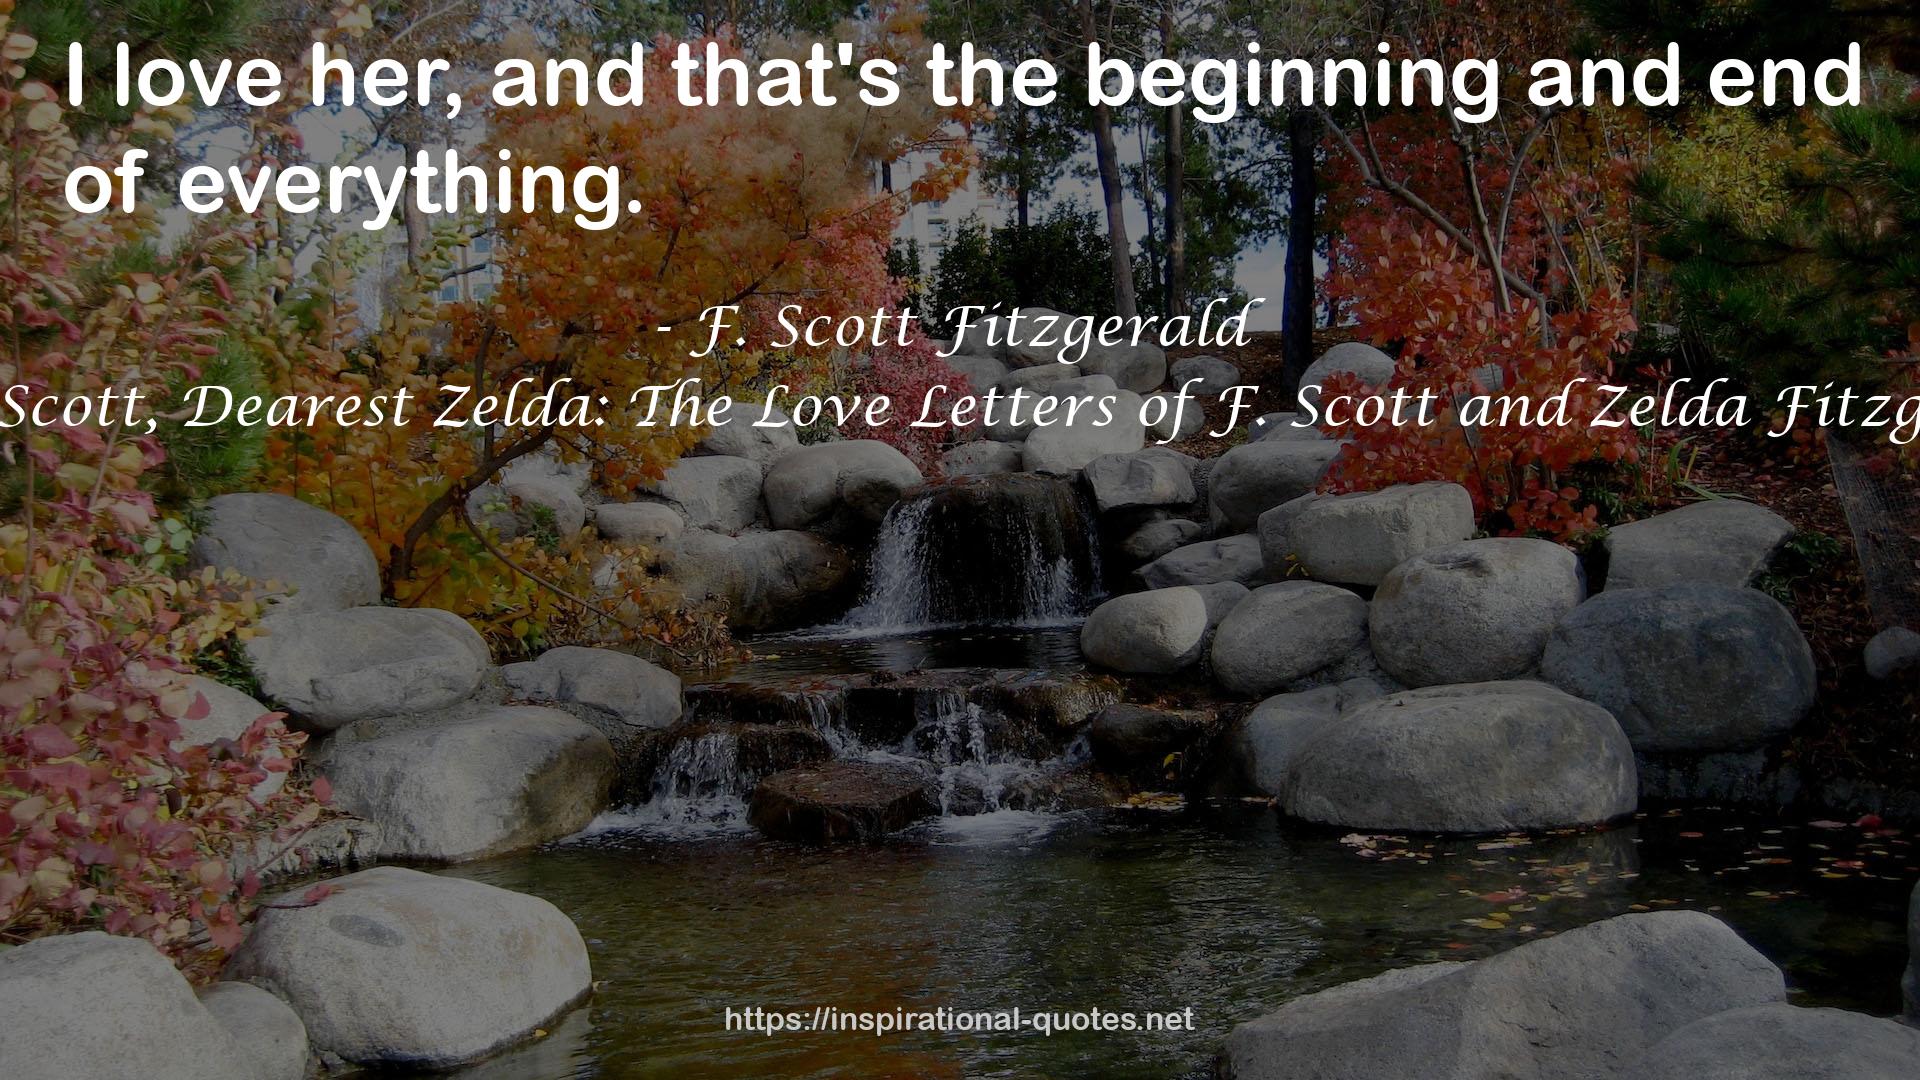 Dear Scott, Dearest Zelda: The Love Letters of F. Scott and Zelda Fitzgerald QUOTES